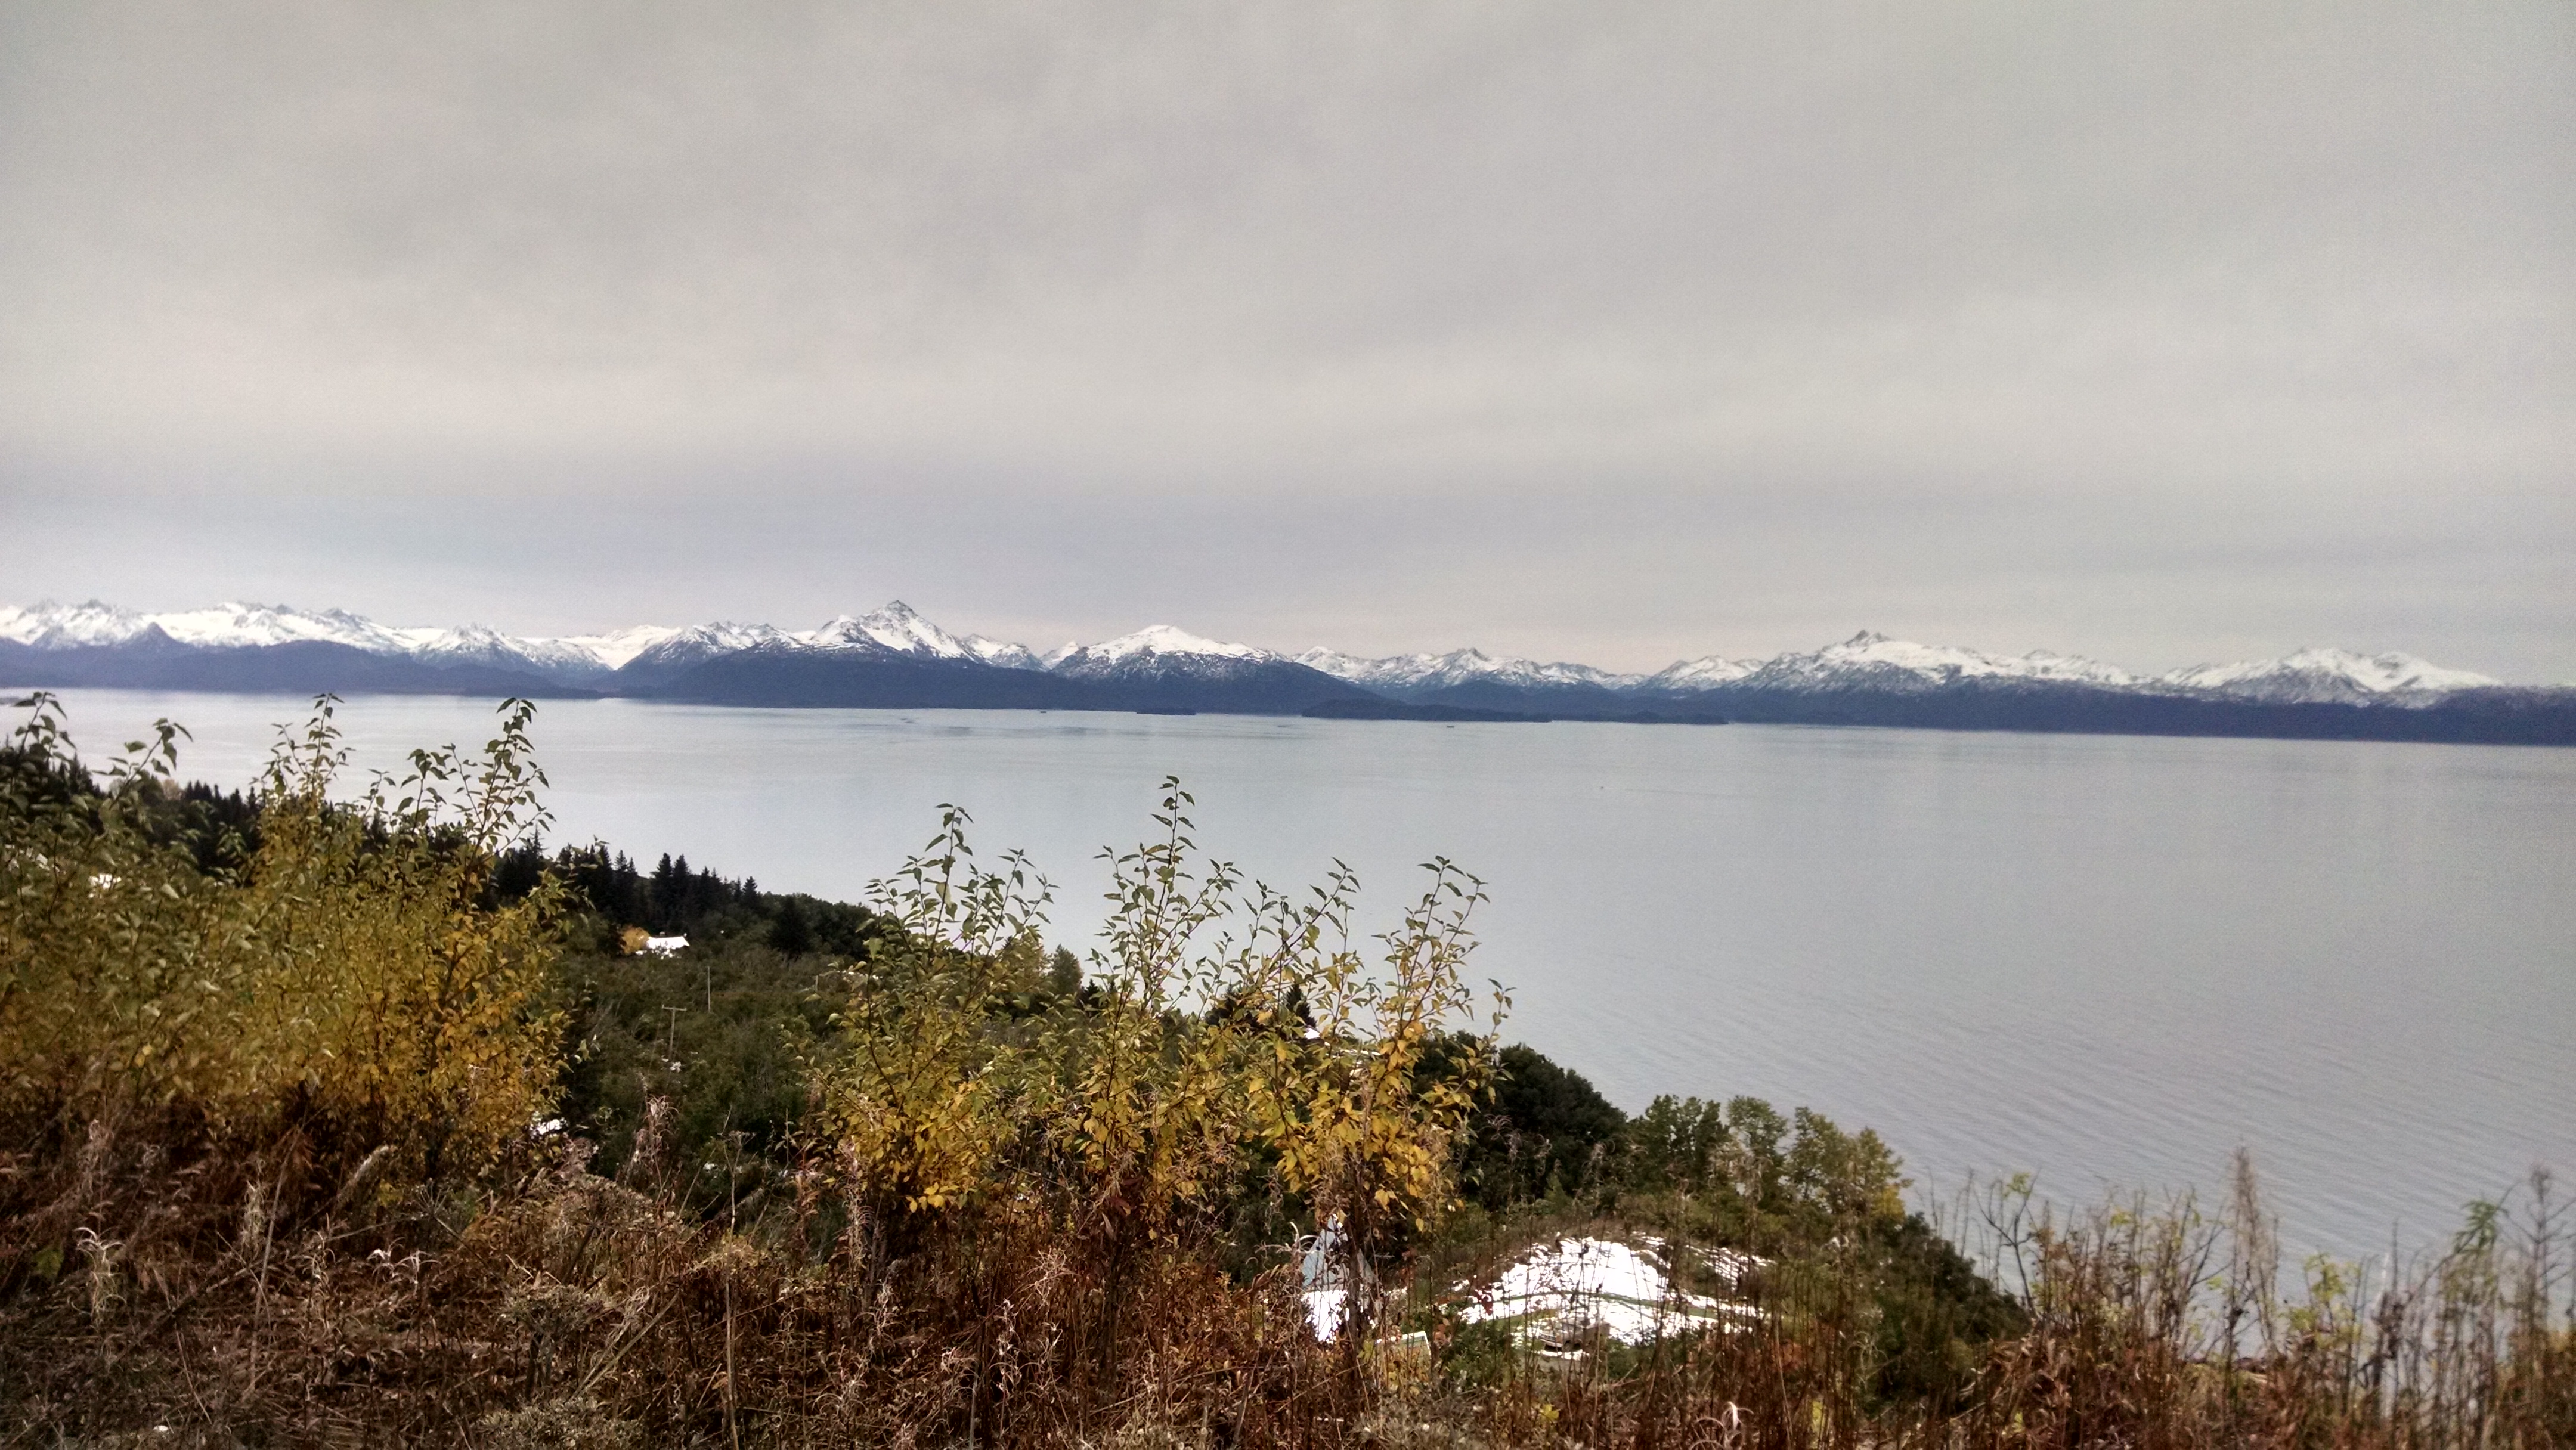 Snow capped Alaskan peaks and ocean view